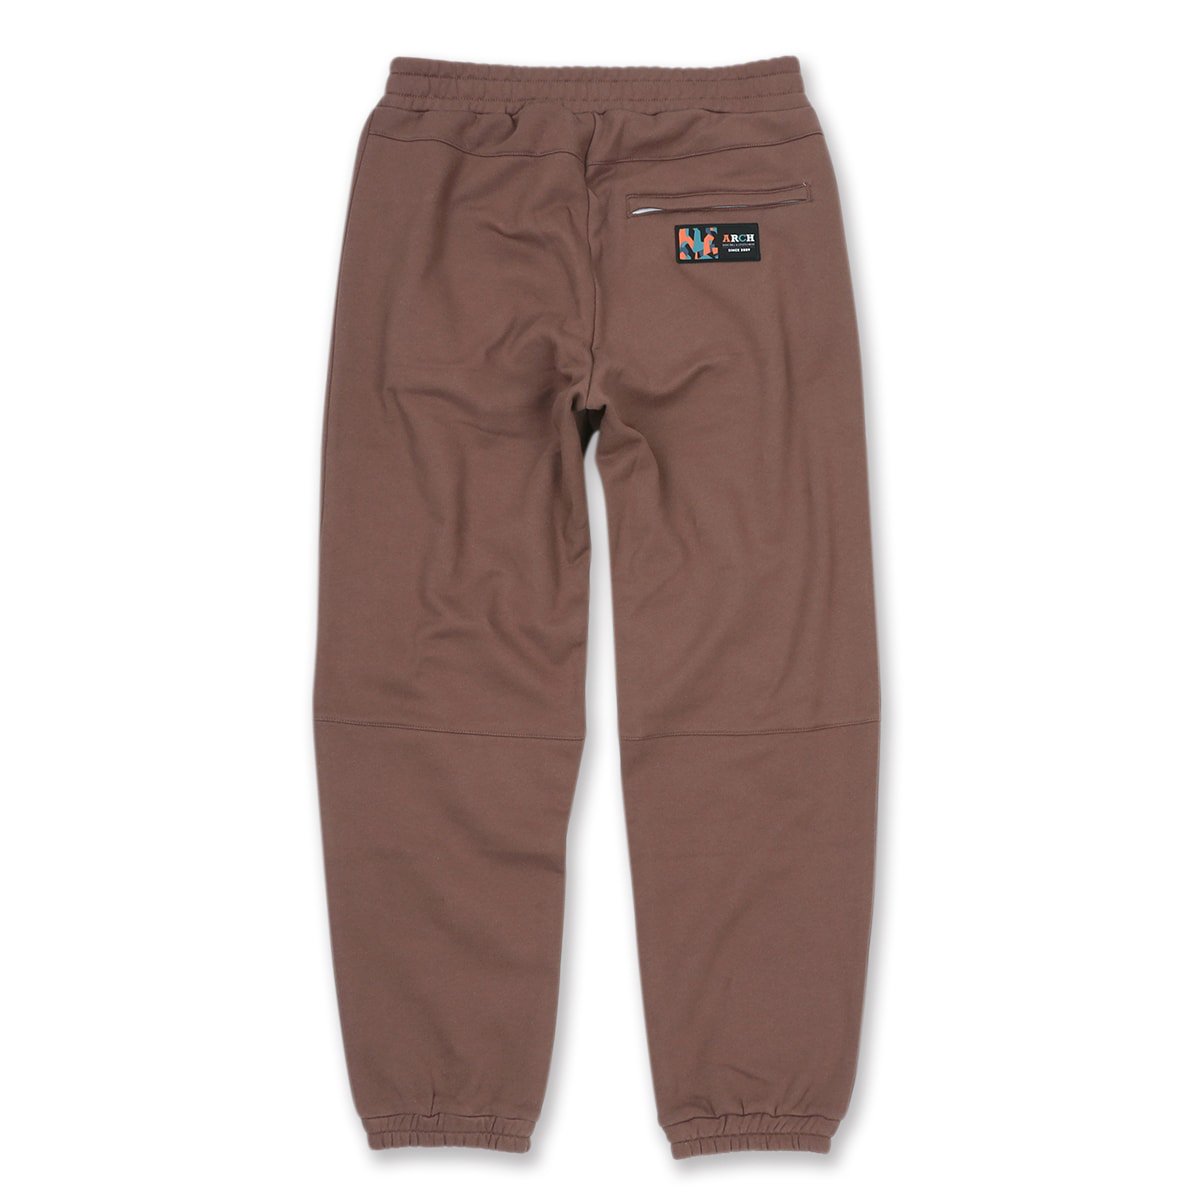 4colors sweat pants【cocoa】 - Arch ☆ アーチ [バスケットボール＆ライフスタイルウェア  Basketball&Lifestyle wear]